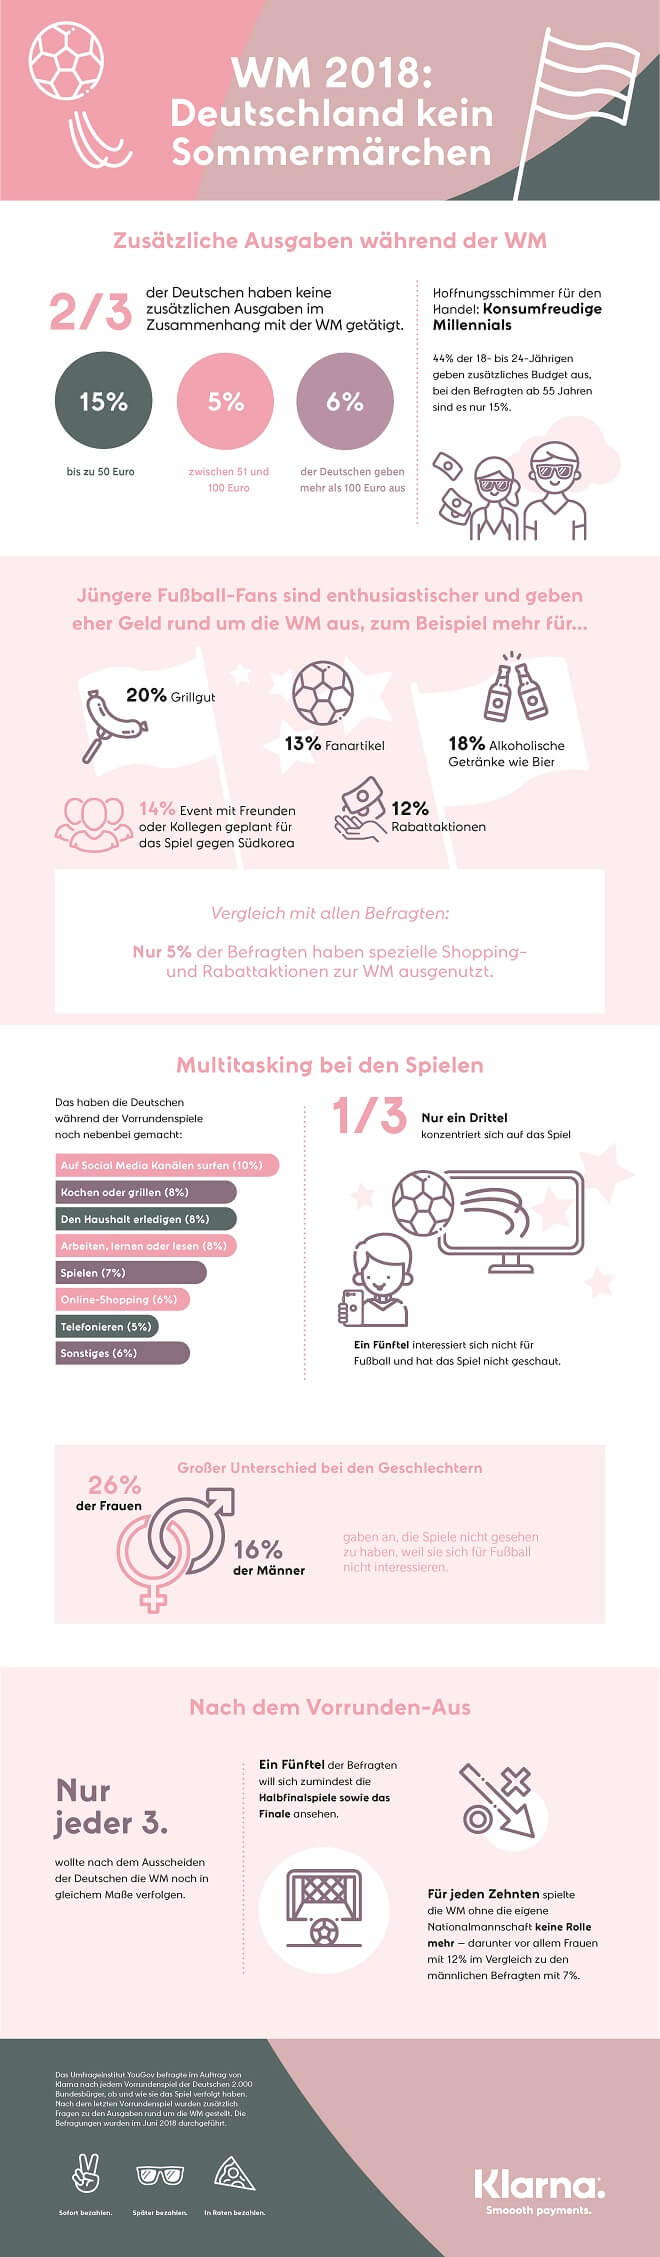 Infografik von Klarna